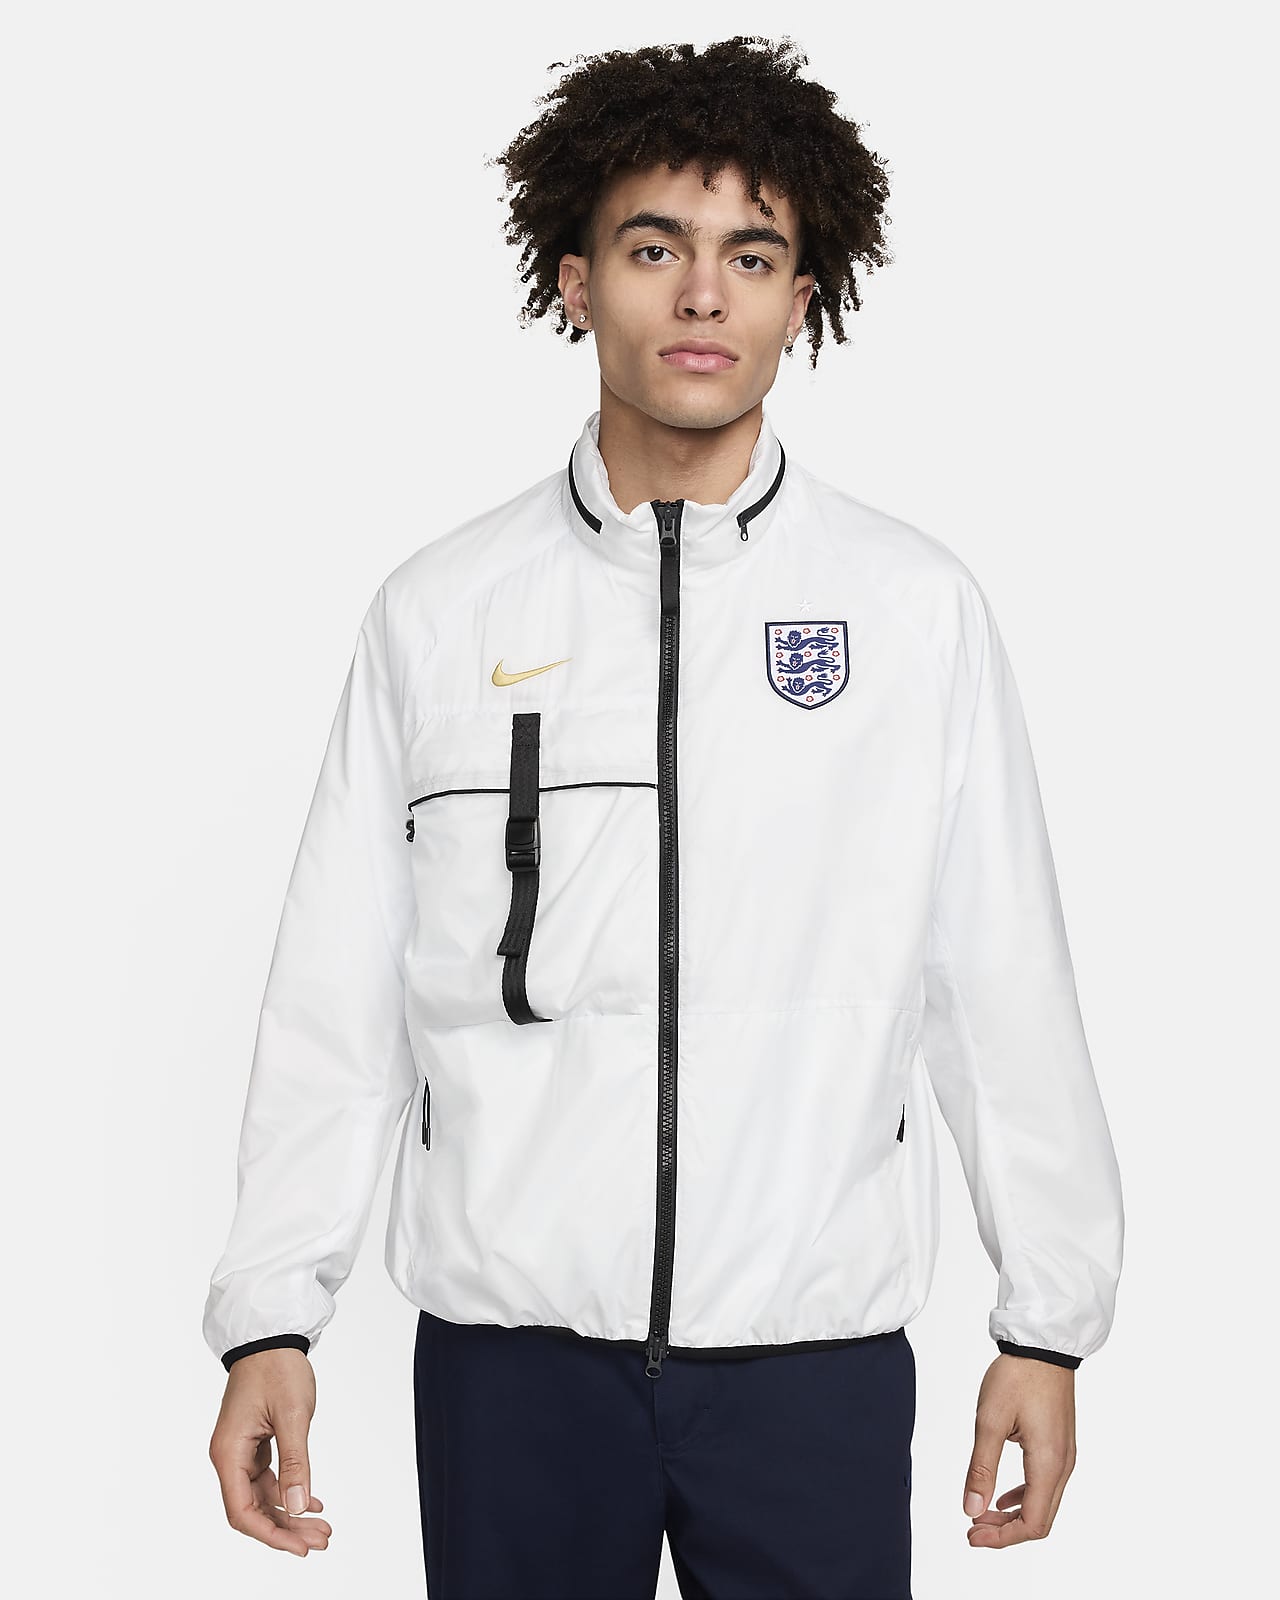 England Men's Nike Soccer Jacket